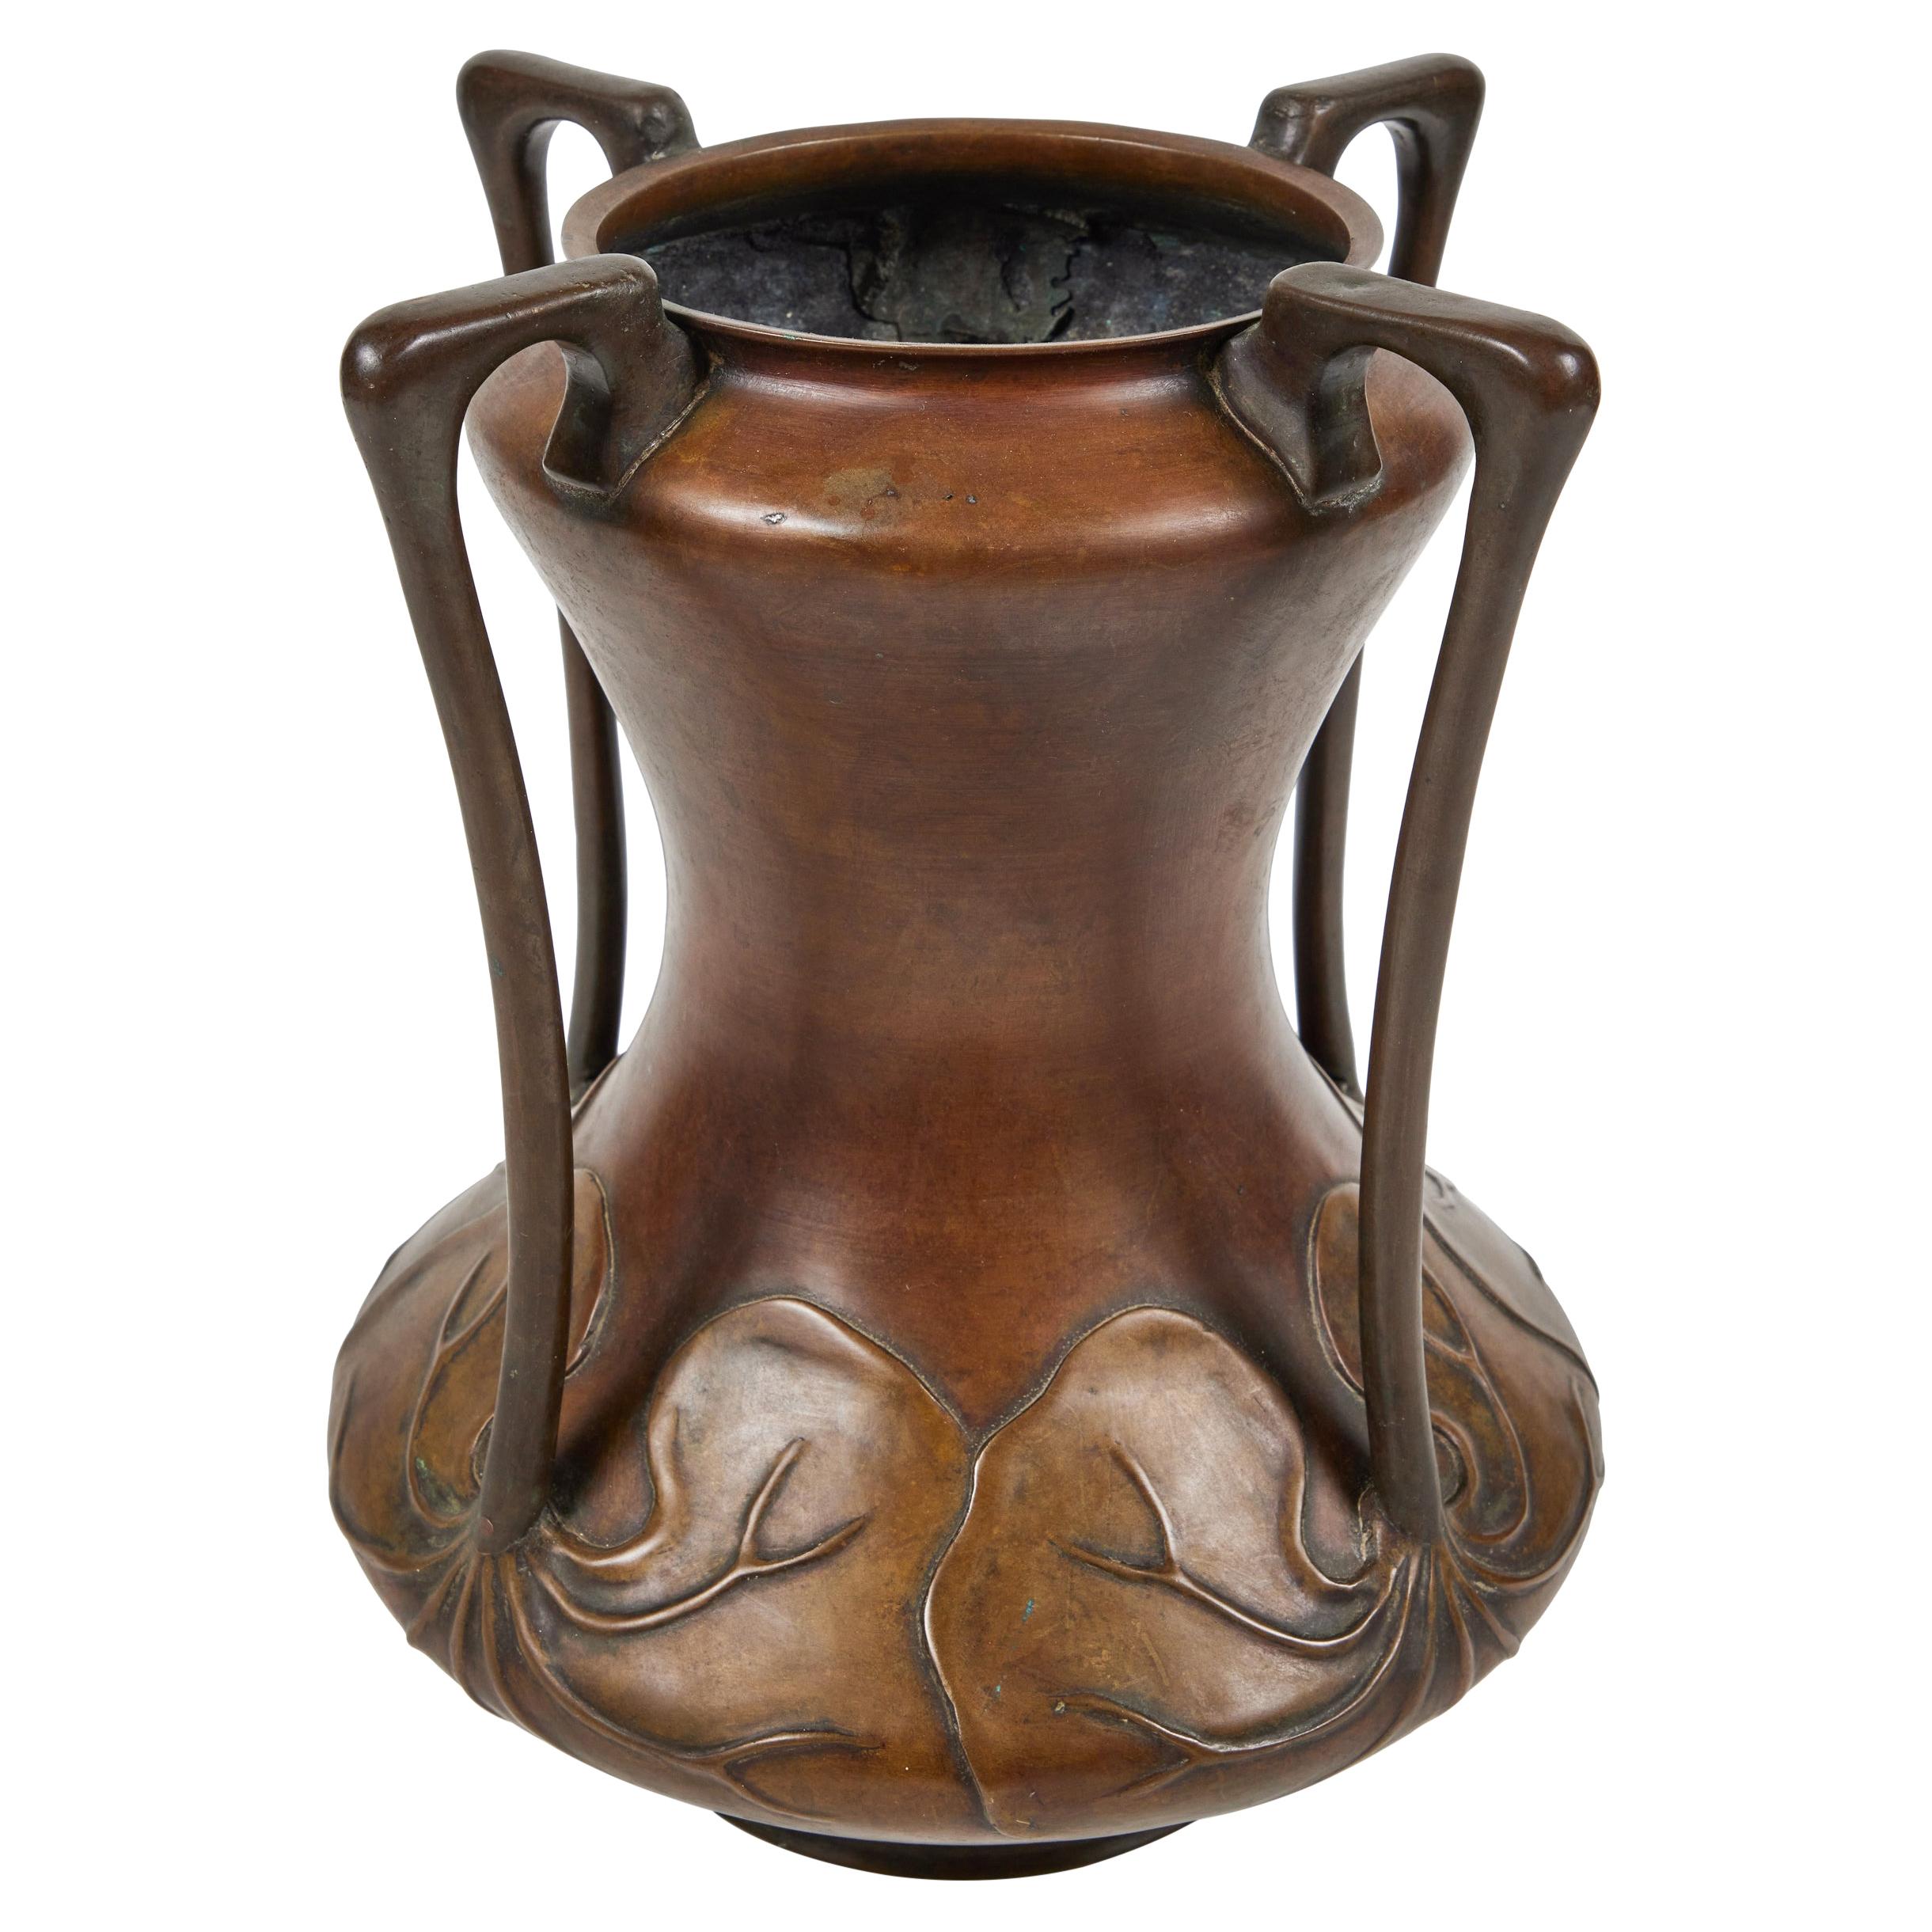 Large Art Nouveau Patinated Bronze Gourd Shaped Vase